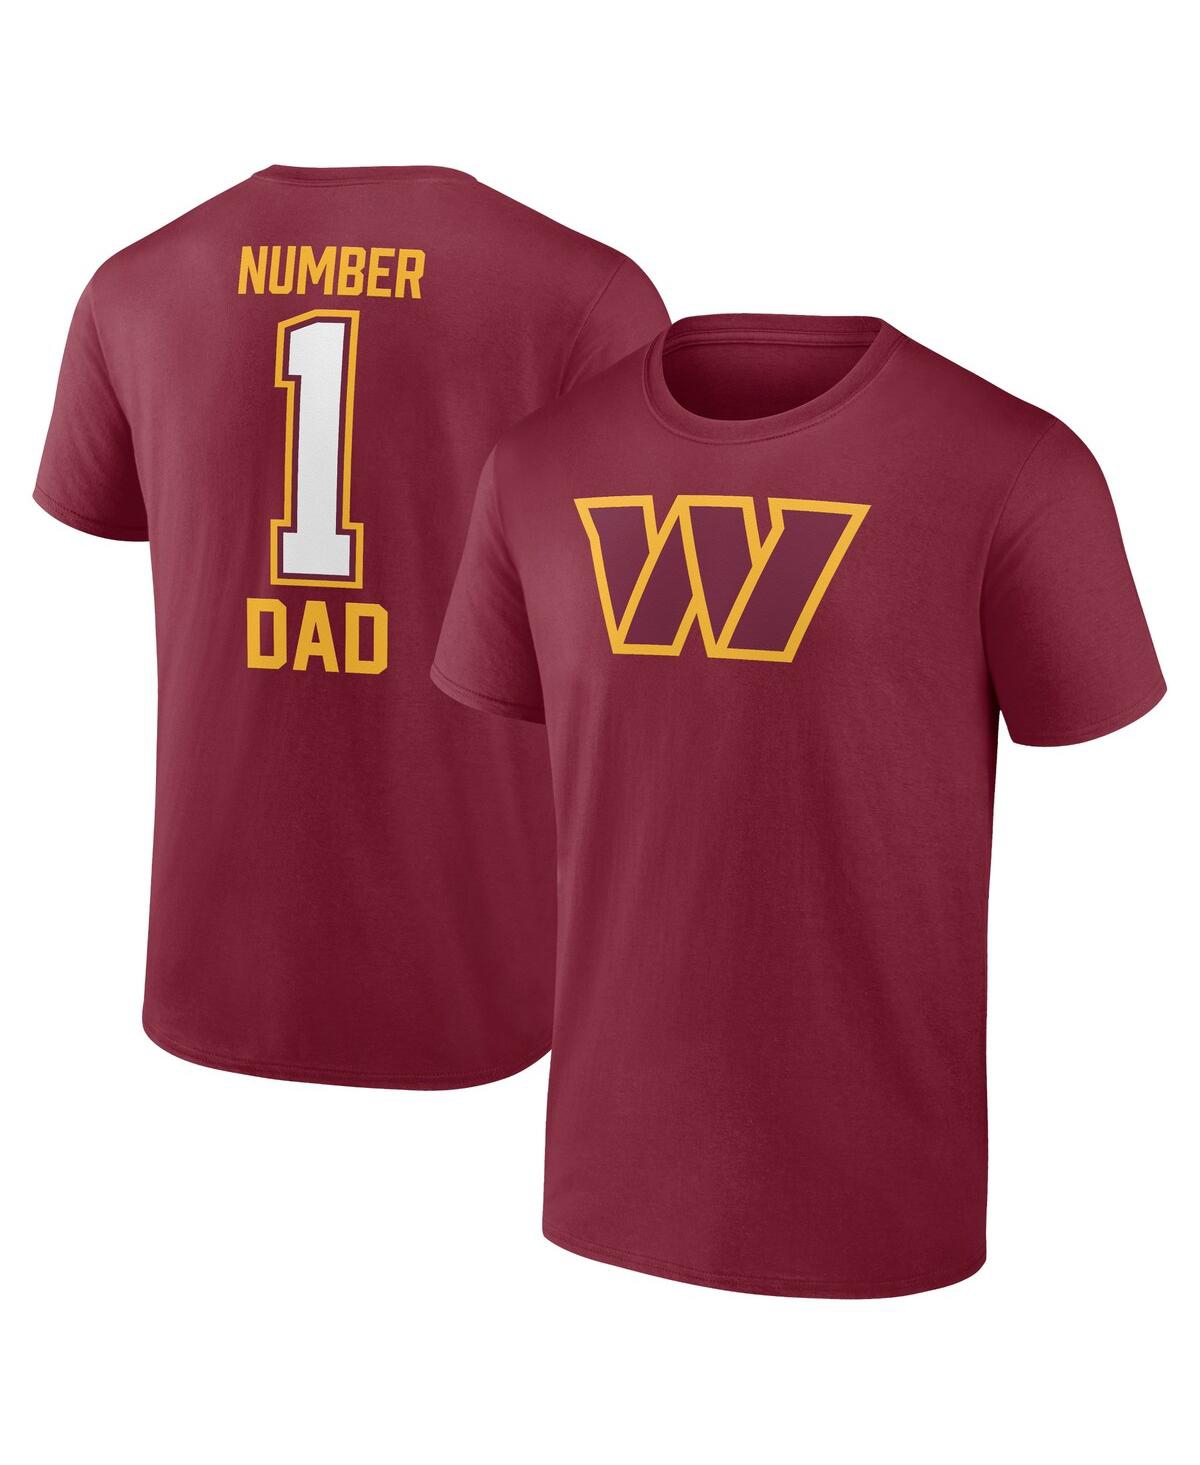 Shop Fanatics Men's Burgundy Washington Commanders Father's Day T-shirt